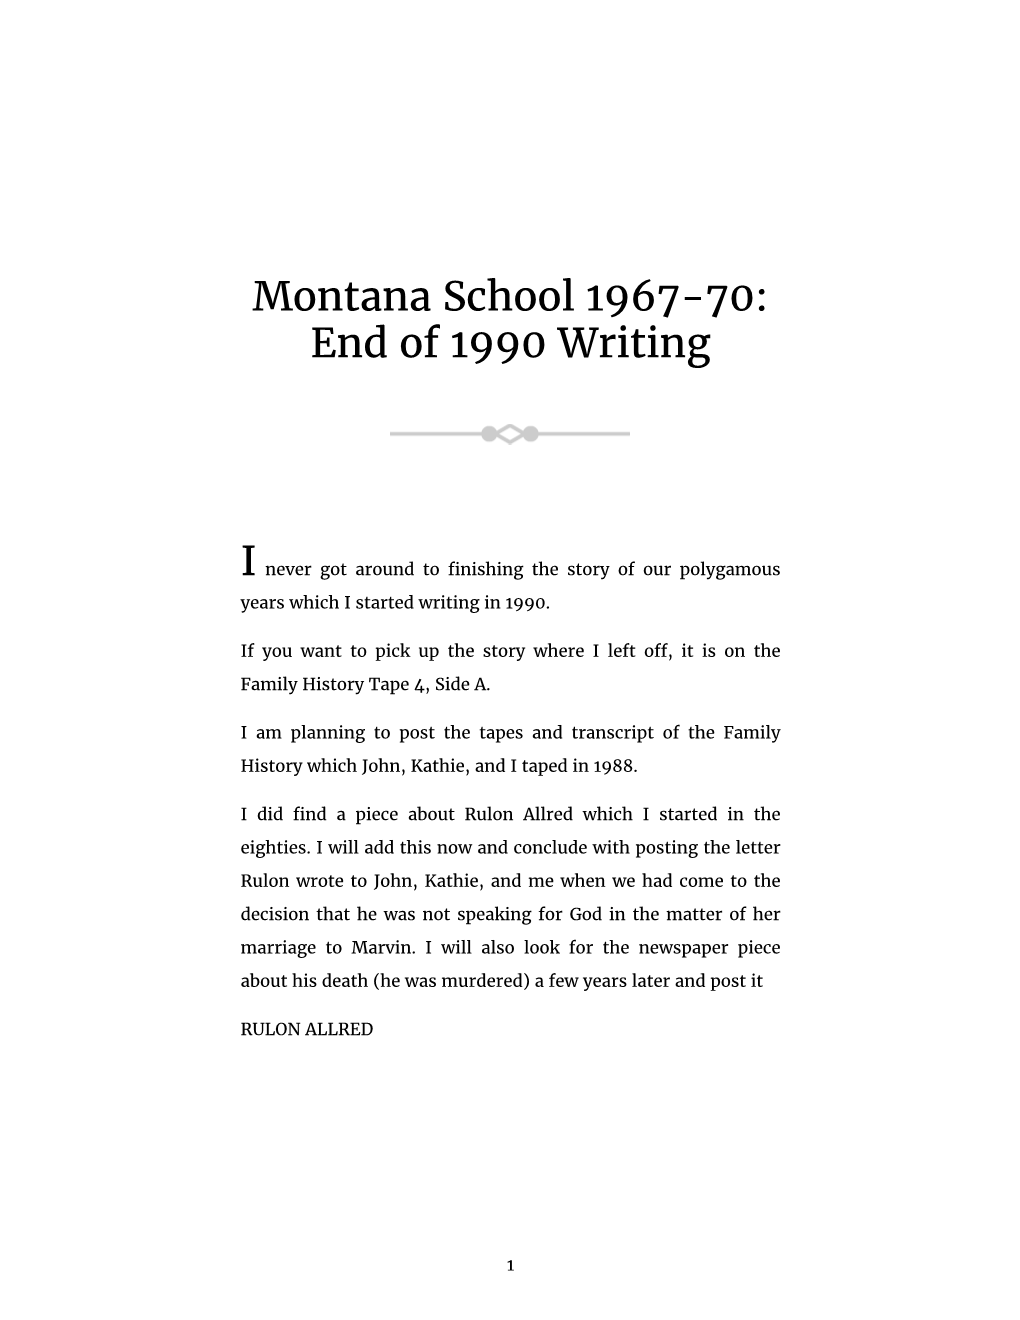 Montana School 1967-70: End of 1990 Writing